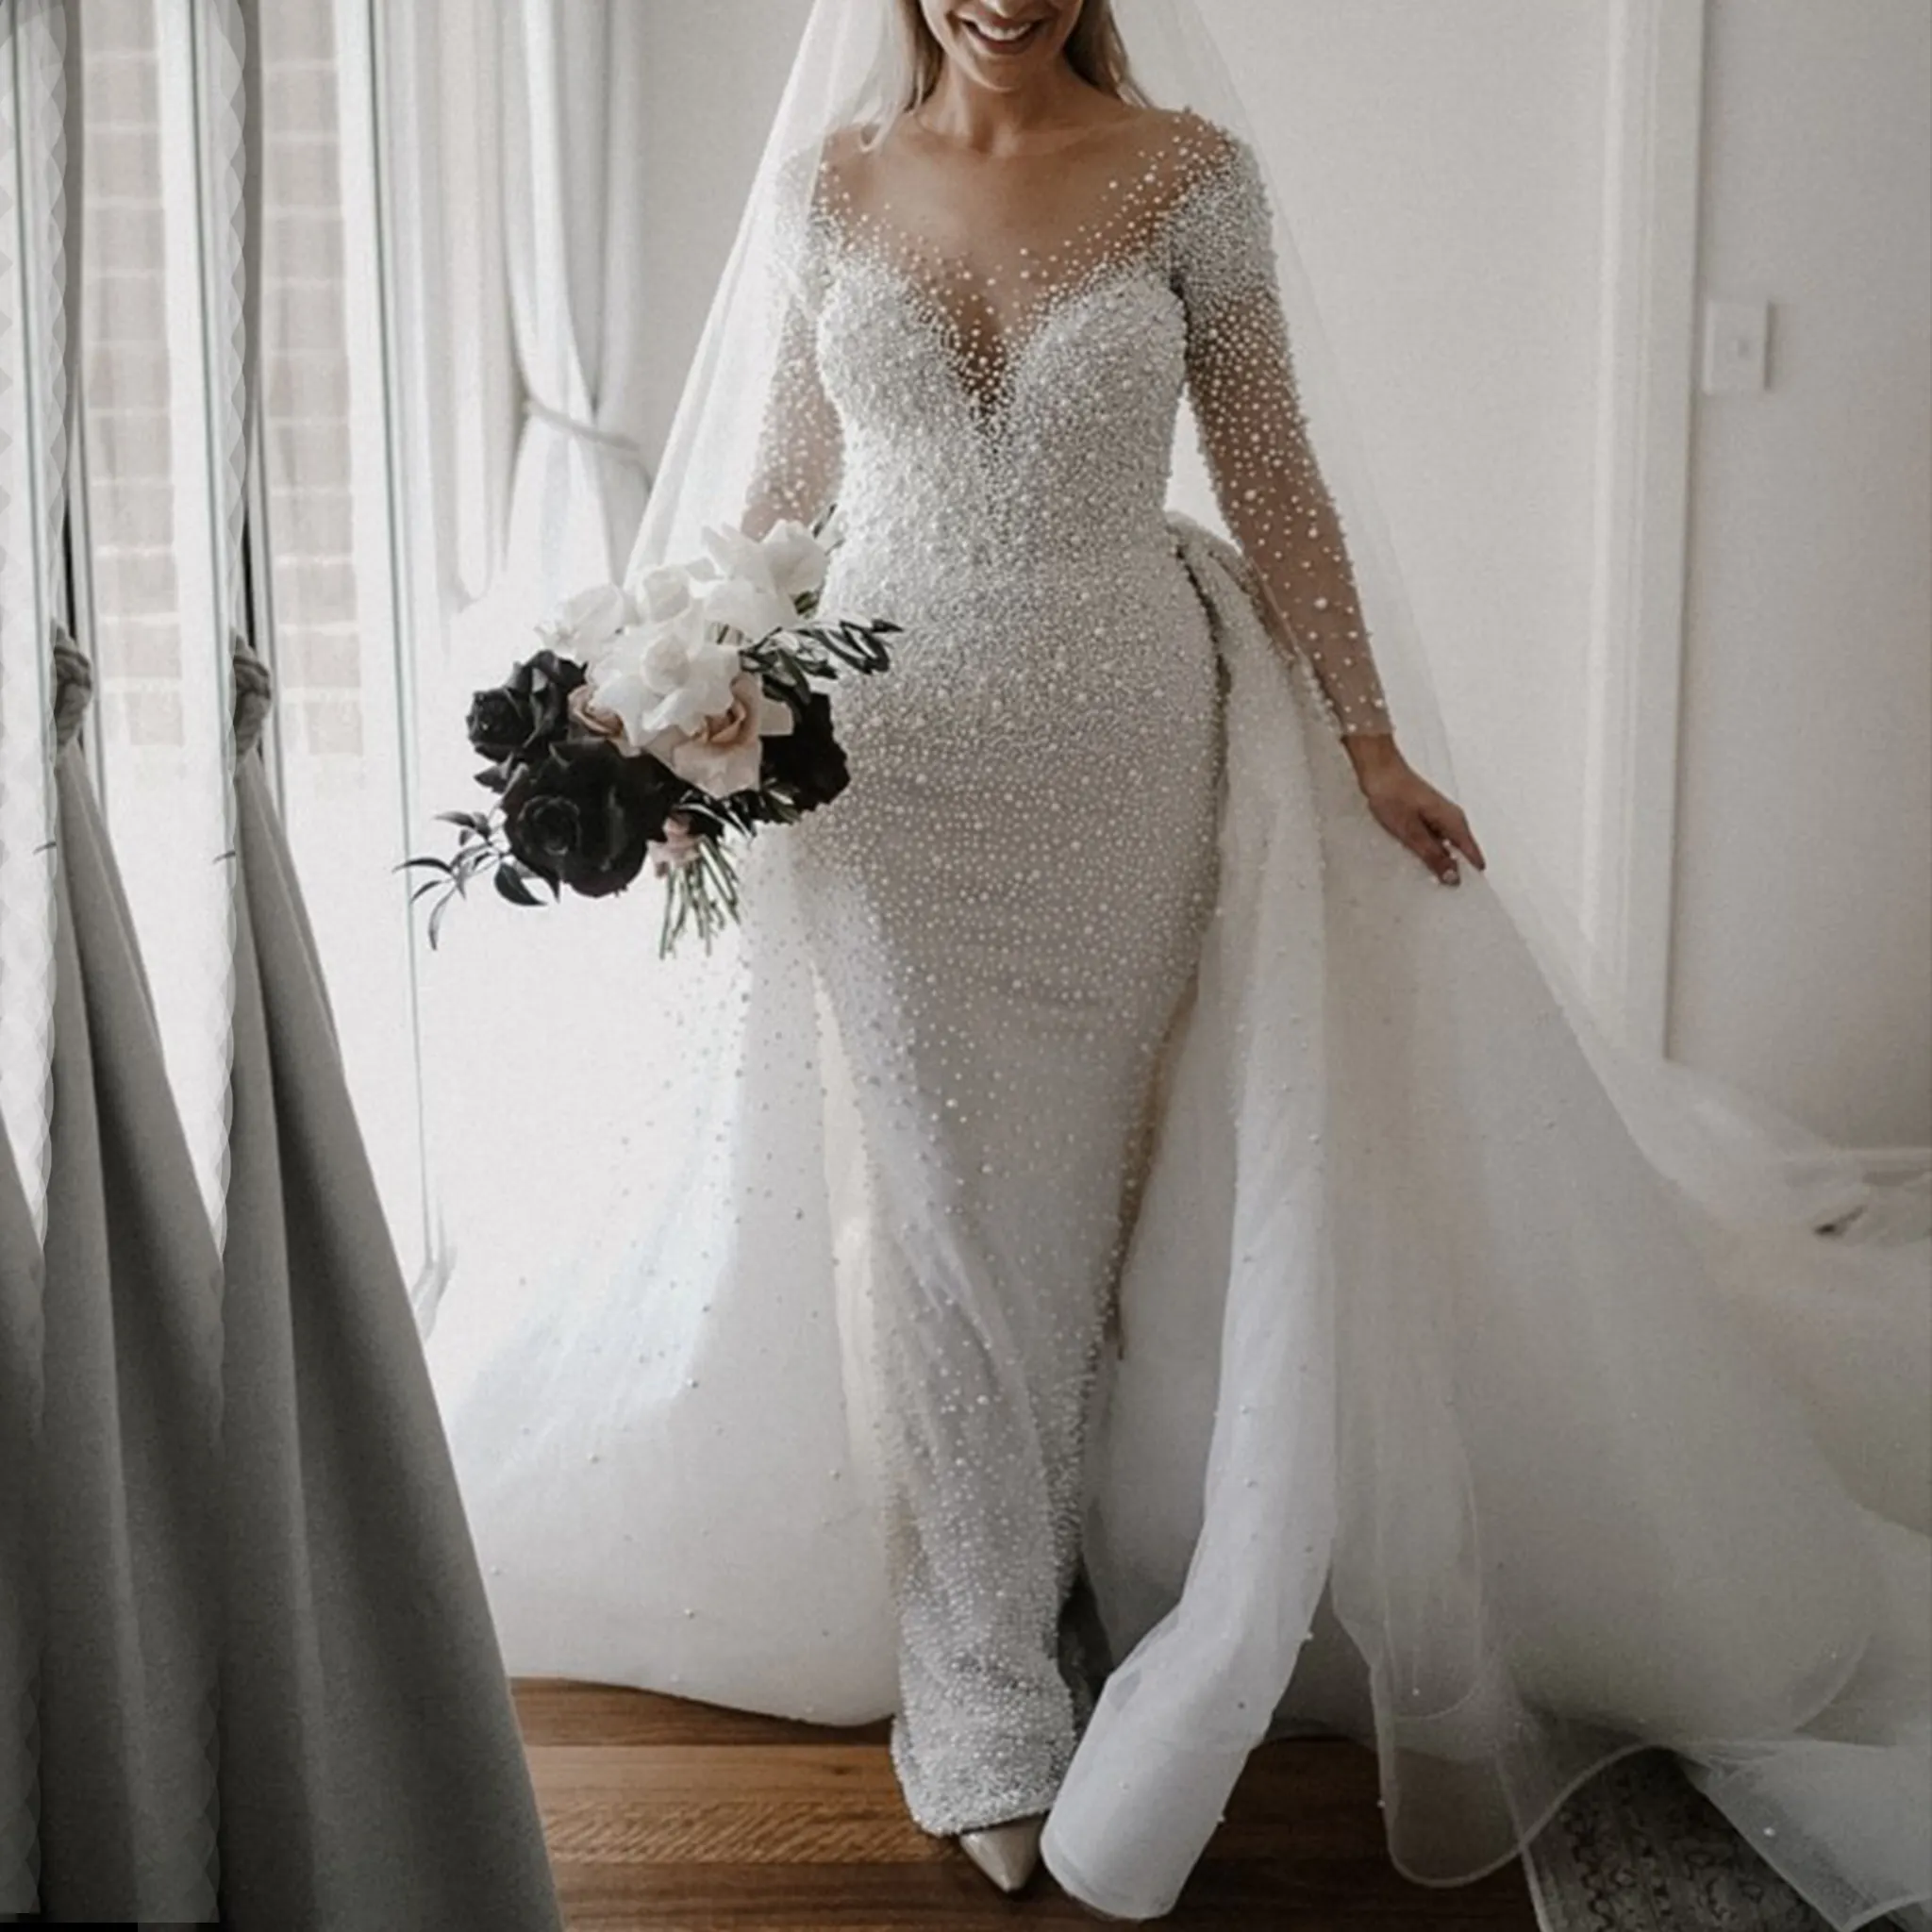 Gaun pernikahan putri duyung putih cantik, gaun pernikahan renda applique rok panjang leher-v dengan kereta api yang dapat dilepas